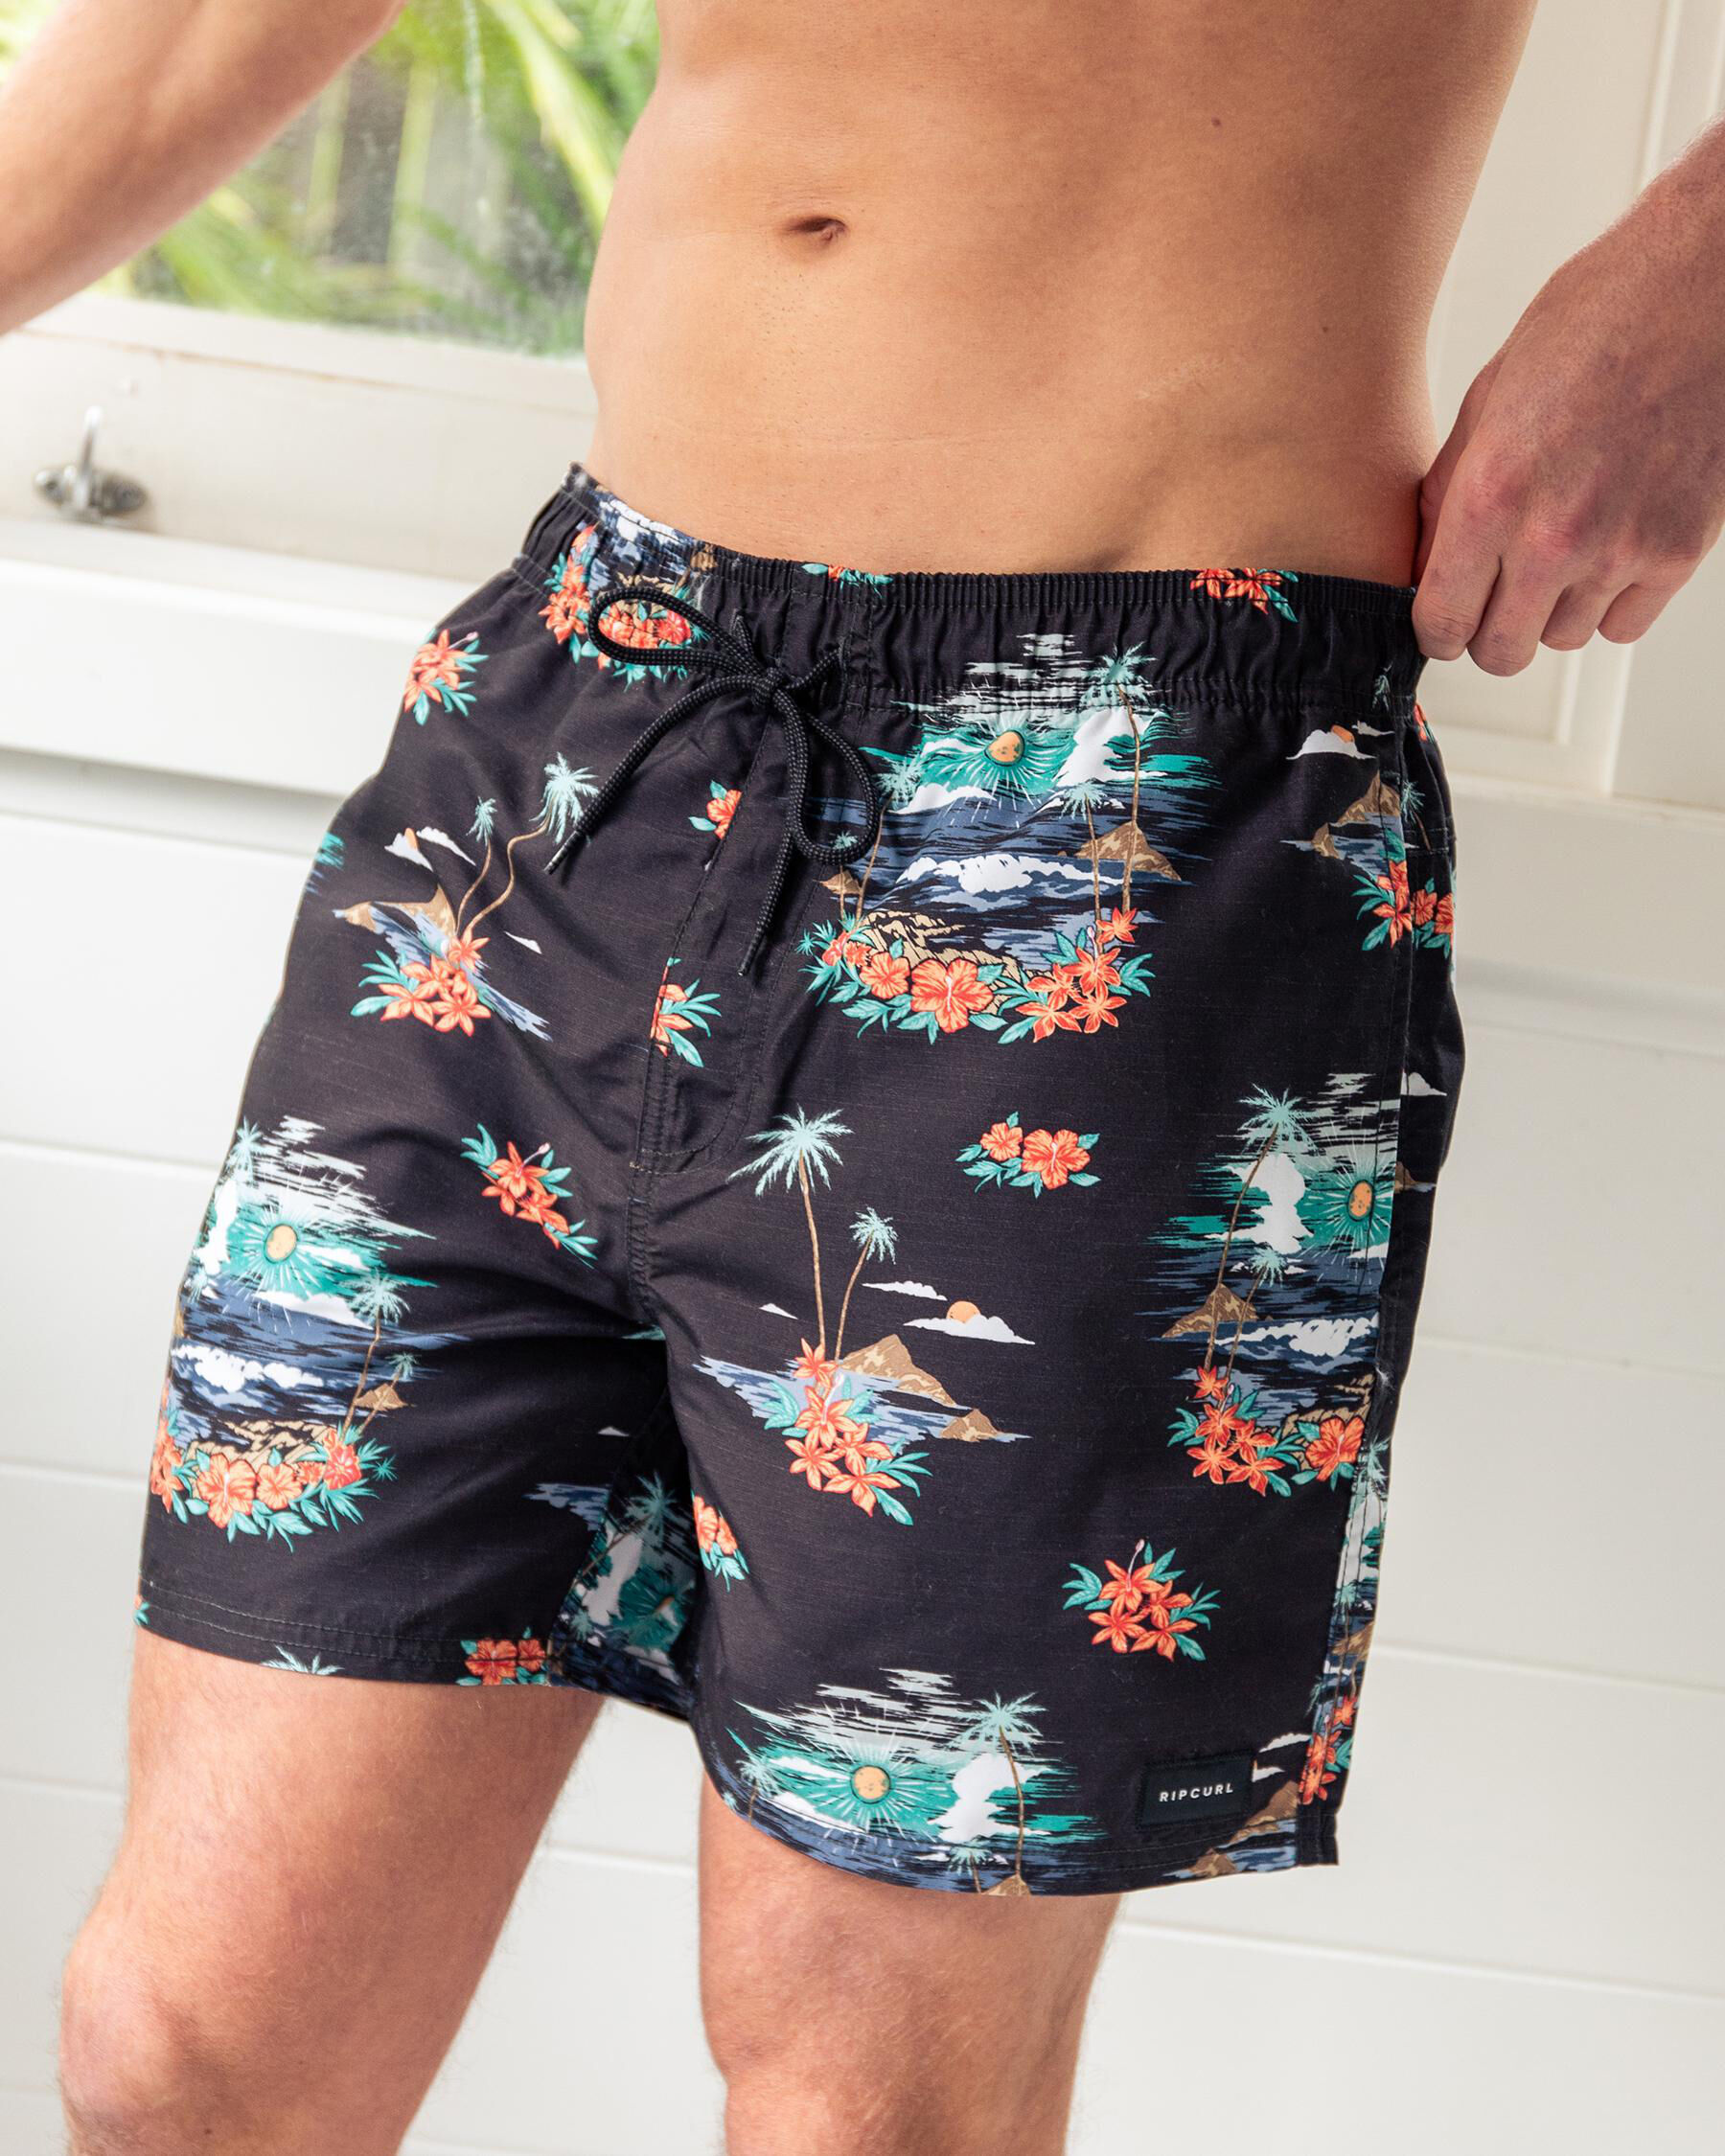 NASA Logo Van Gogh Man Summer Beach Shorts,Casual ShortsBeach Shorts Board Shorts White